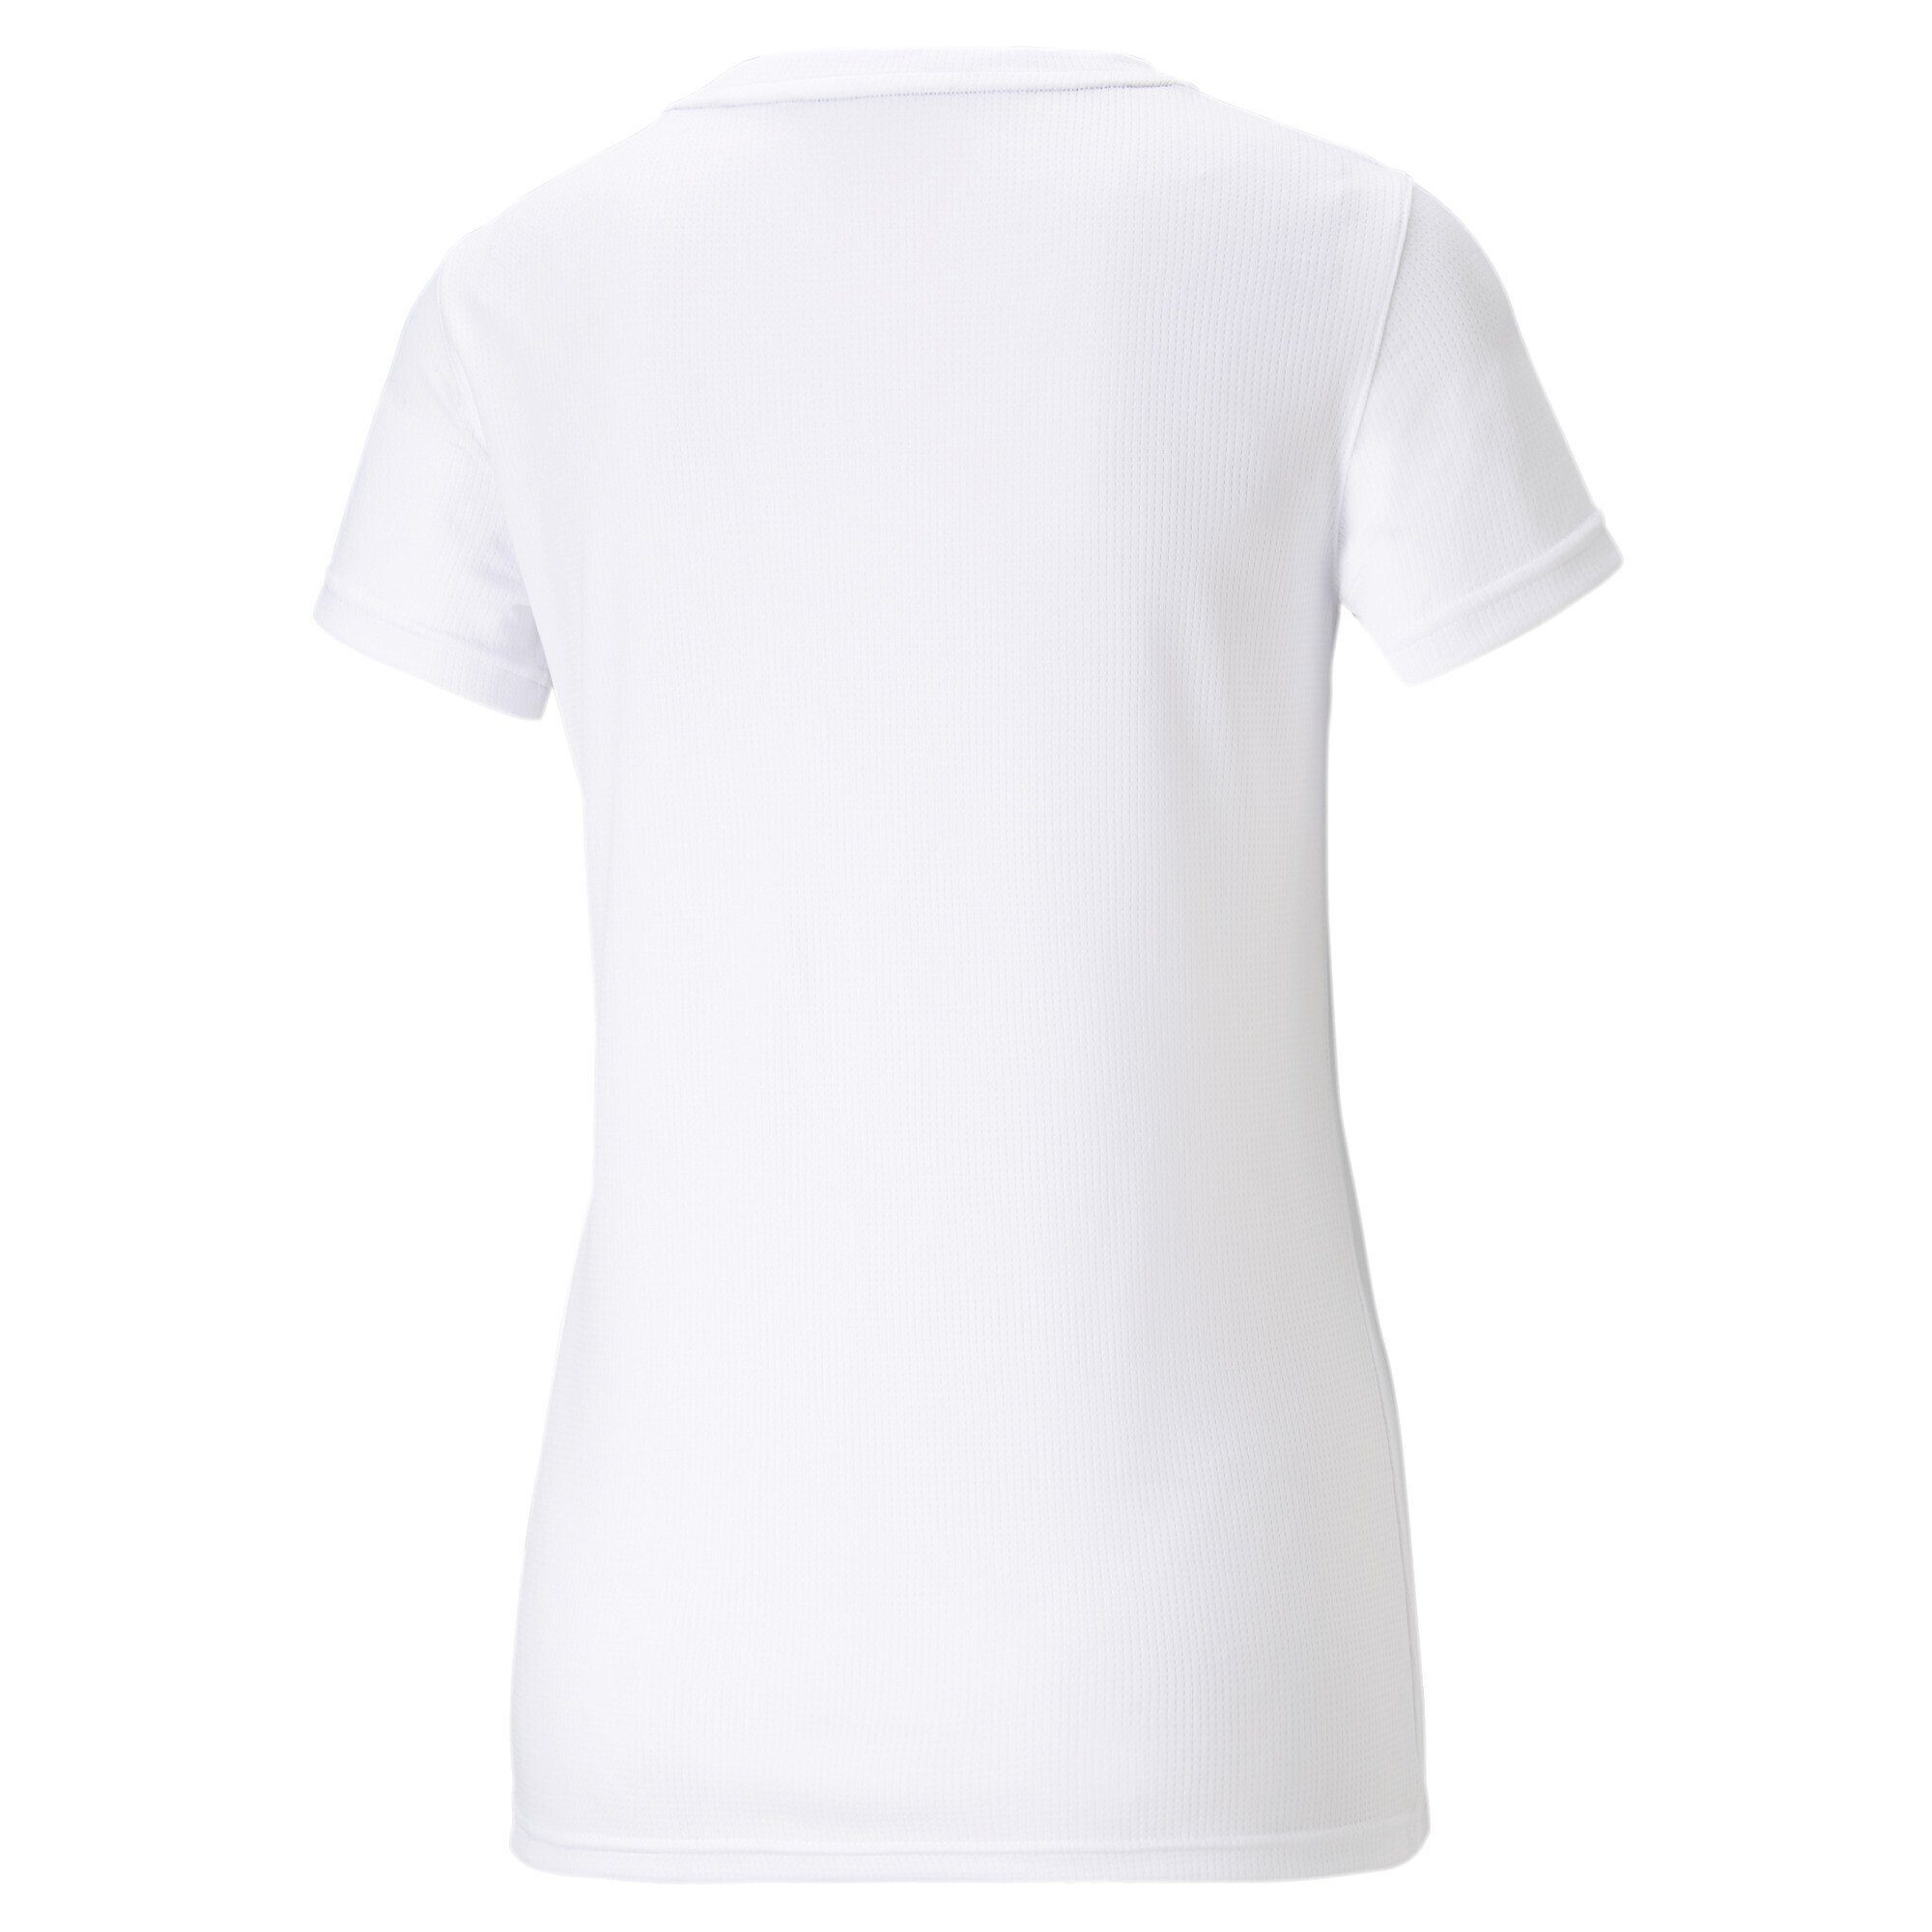 Damen White Performance PUMA Trainingsshirt Trainings-T-Shirt